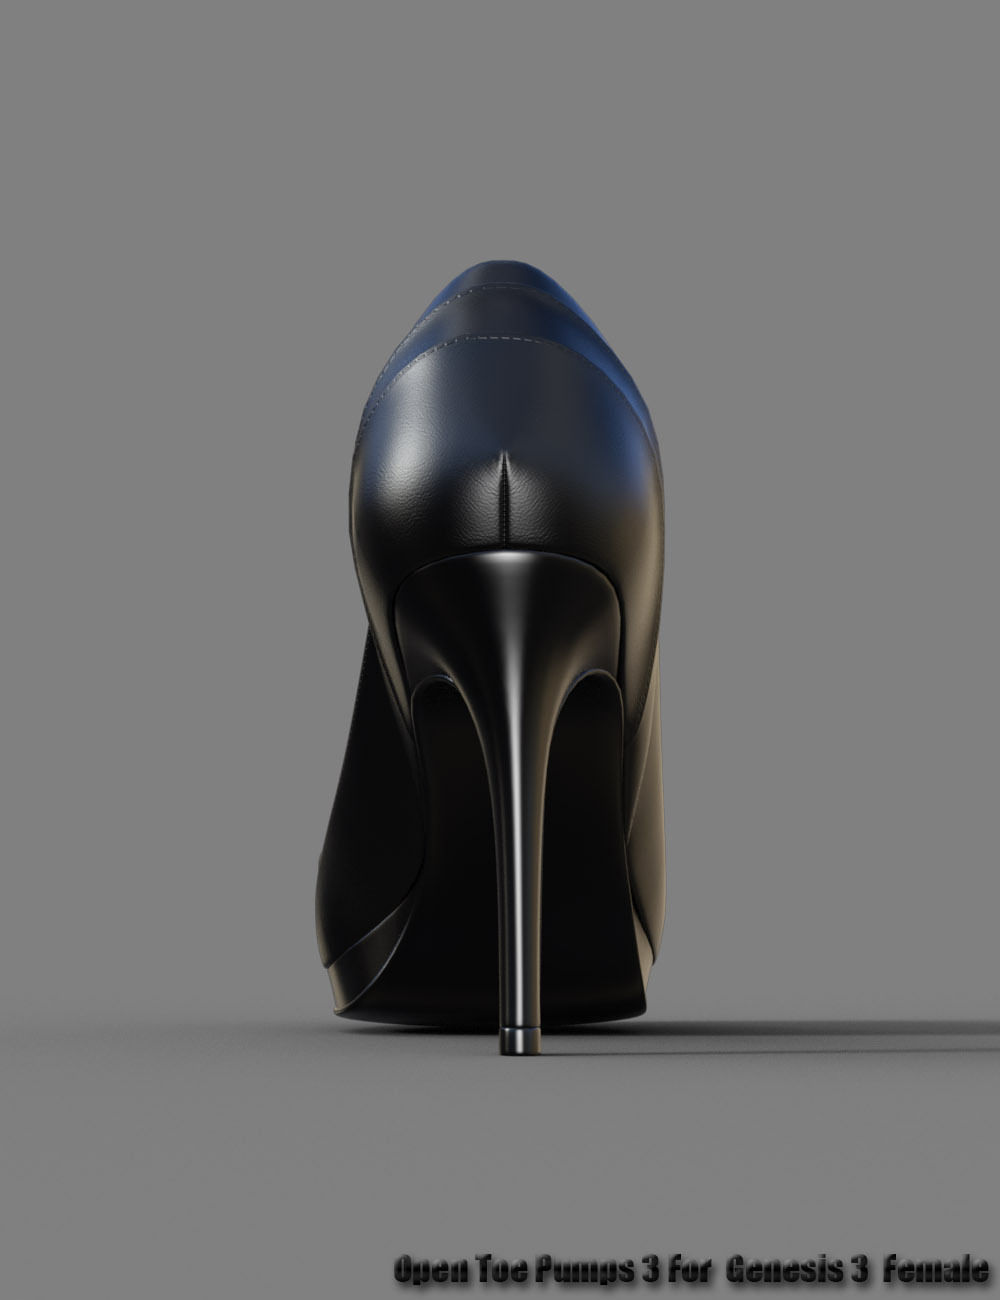 Open Toe Pumps 3 for Genesis 3 Female(s) by: dx30, 3D Models by Daz 3D